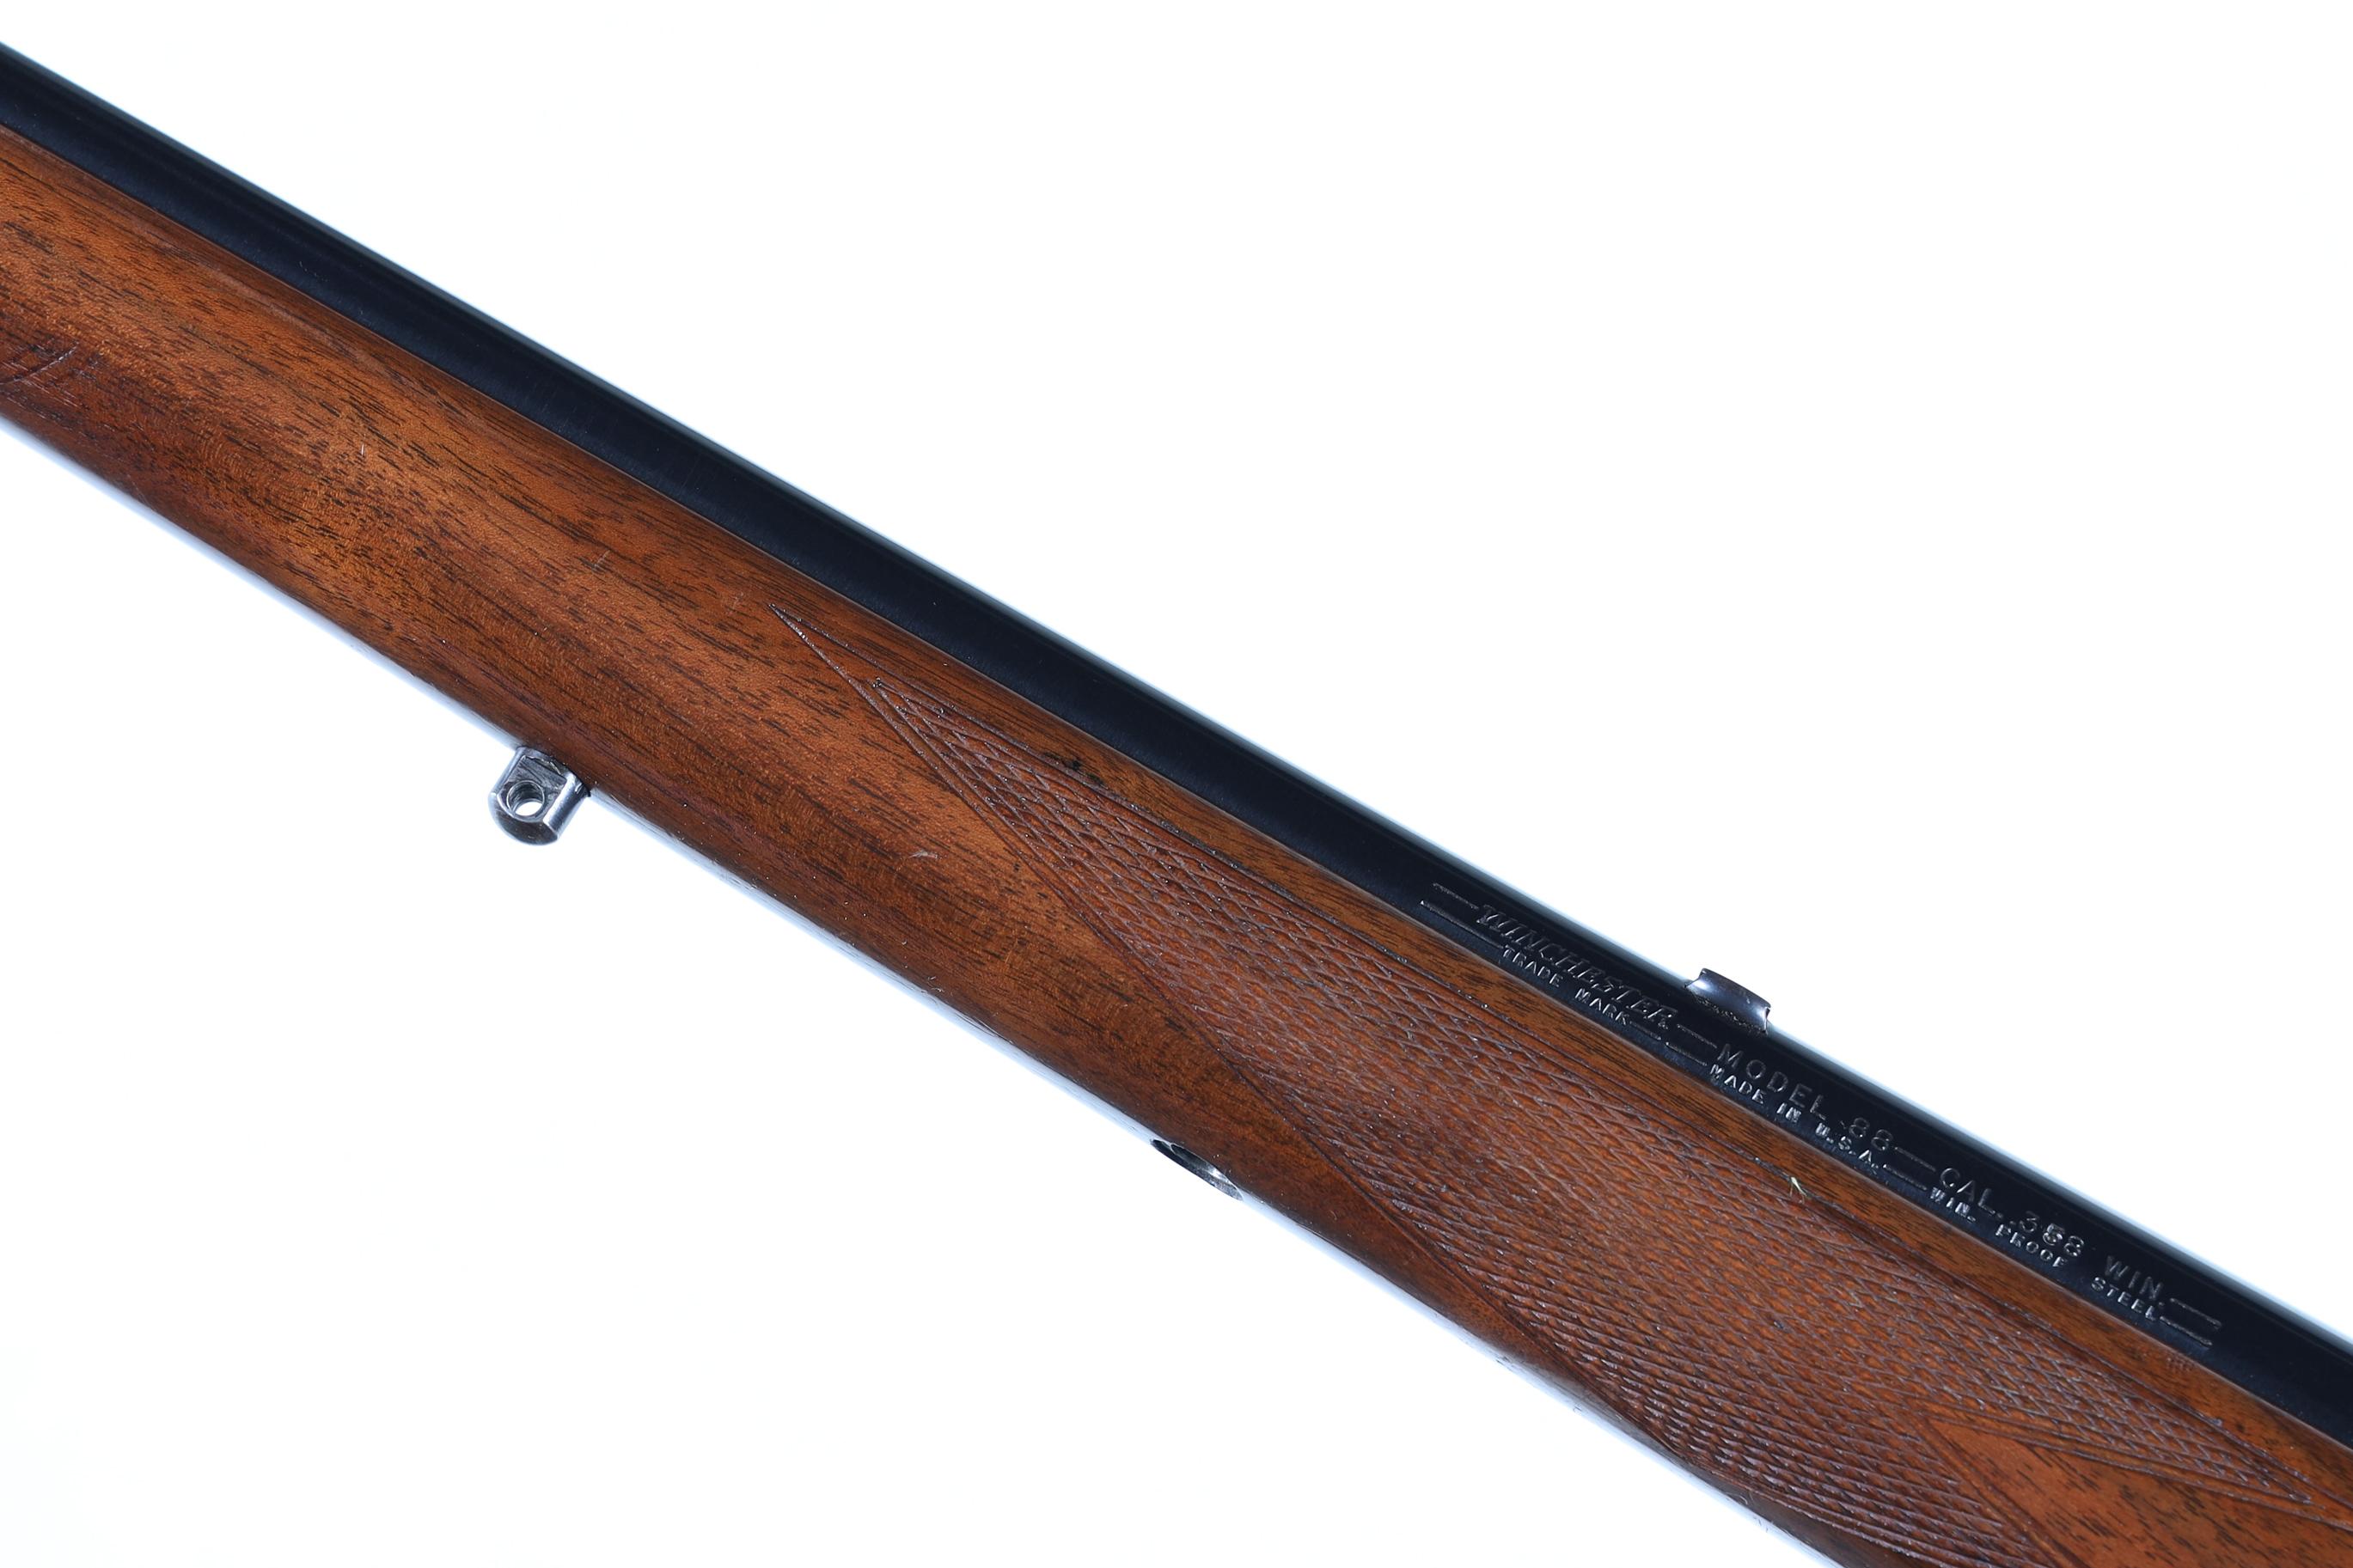 Winchester 88 Lever Rifle .358 Win